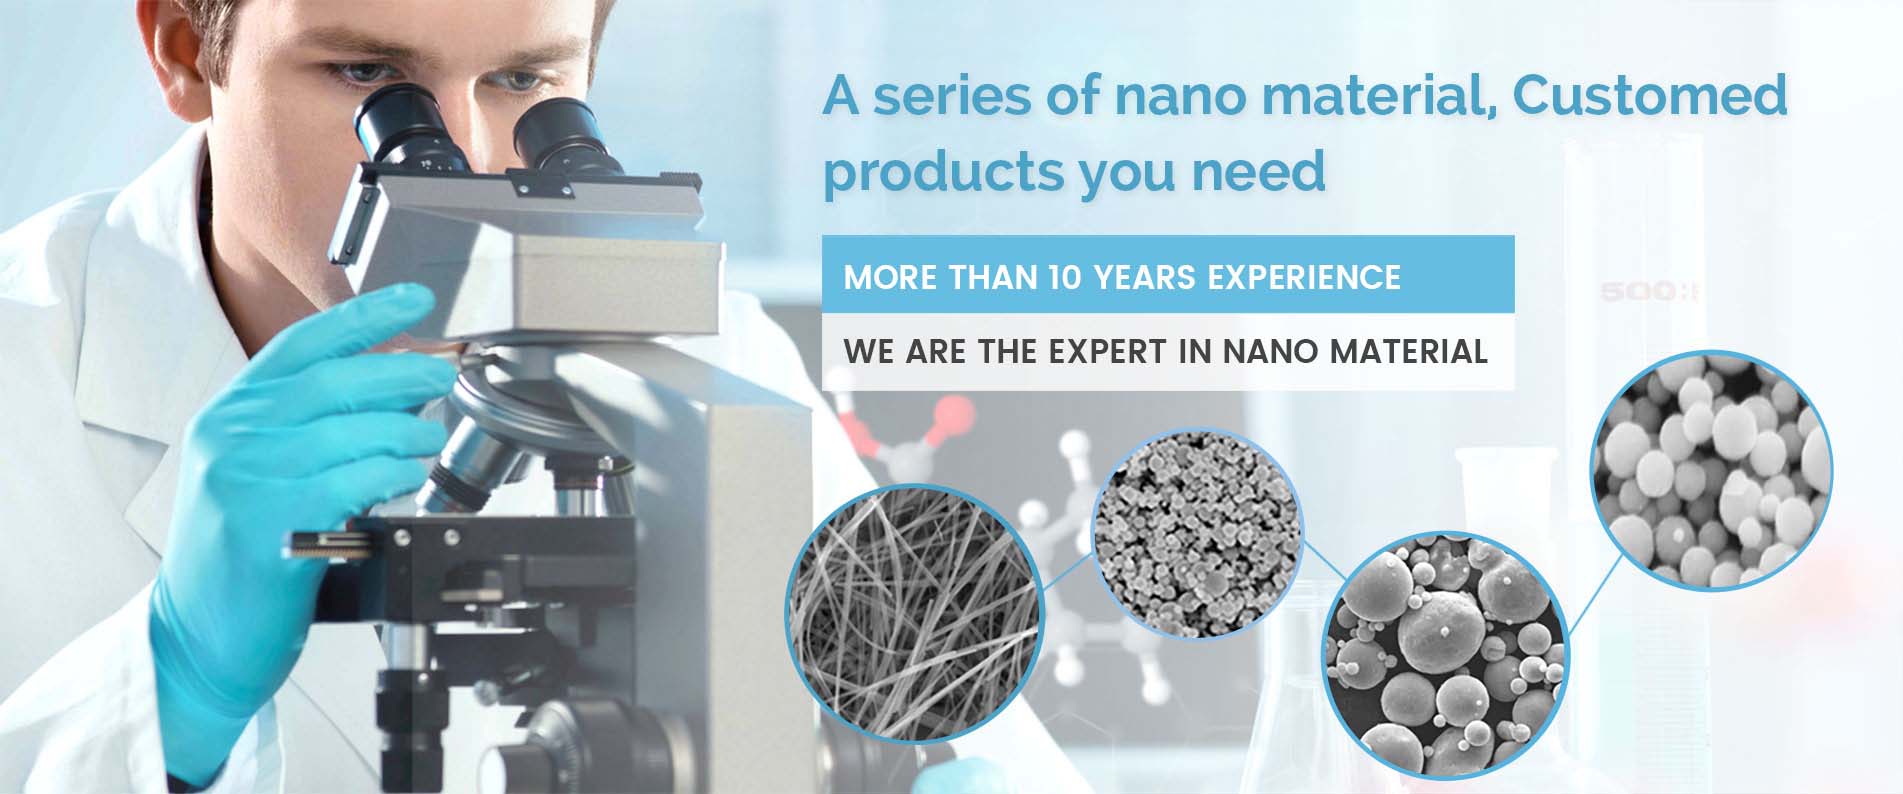 Nano material customed